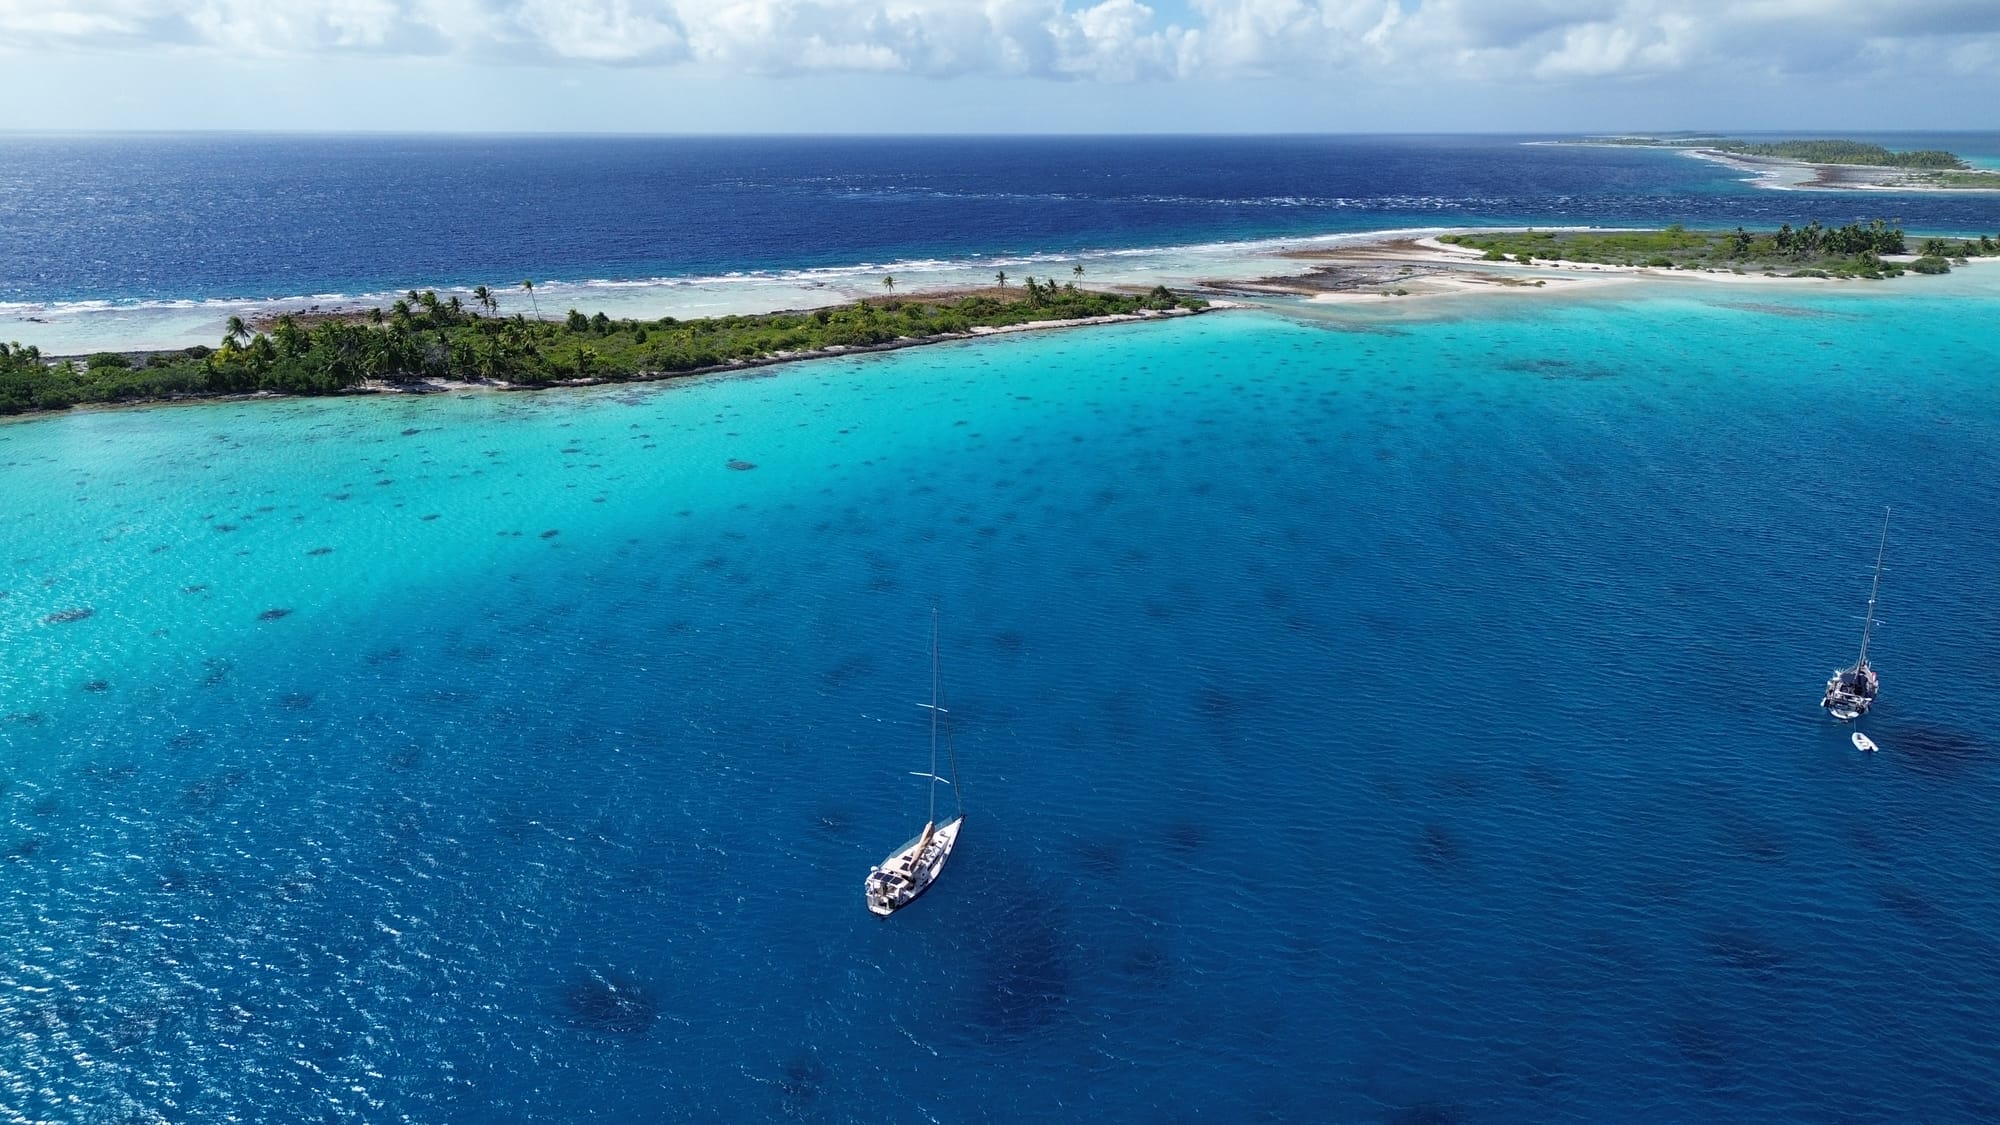 Tahenea – Our Favorite Atoll so Far – May 30